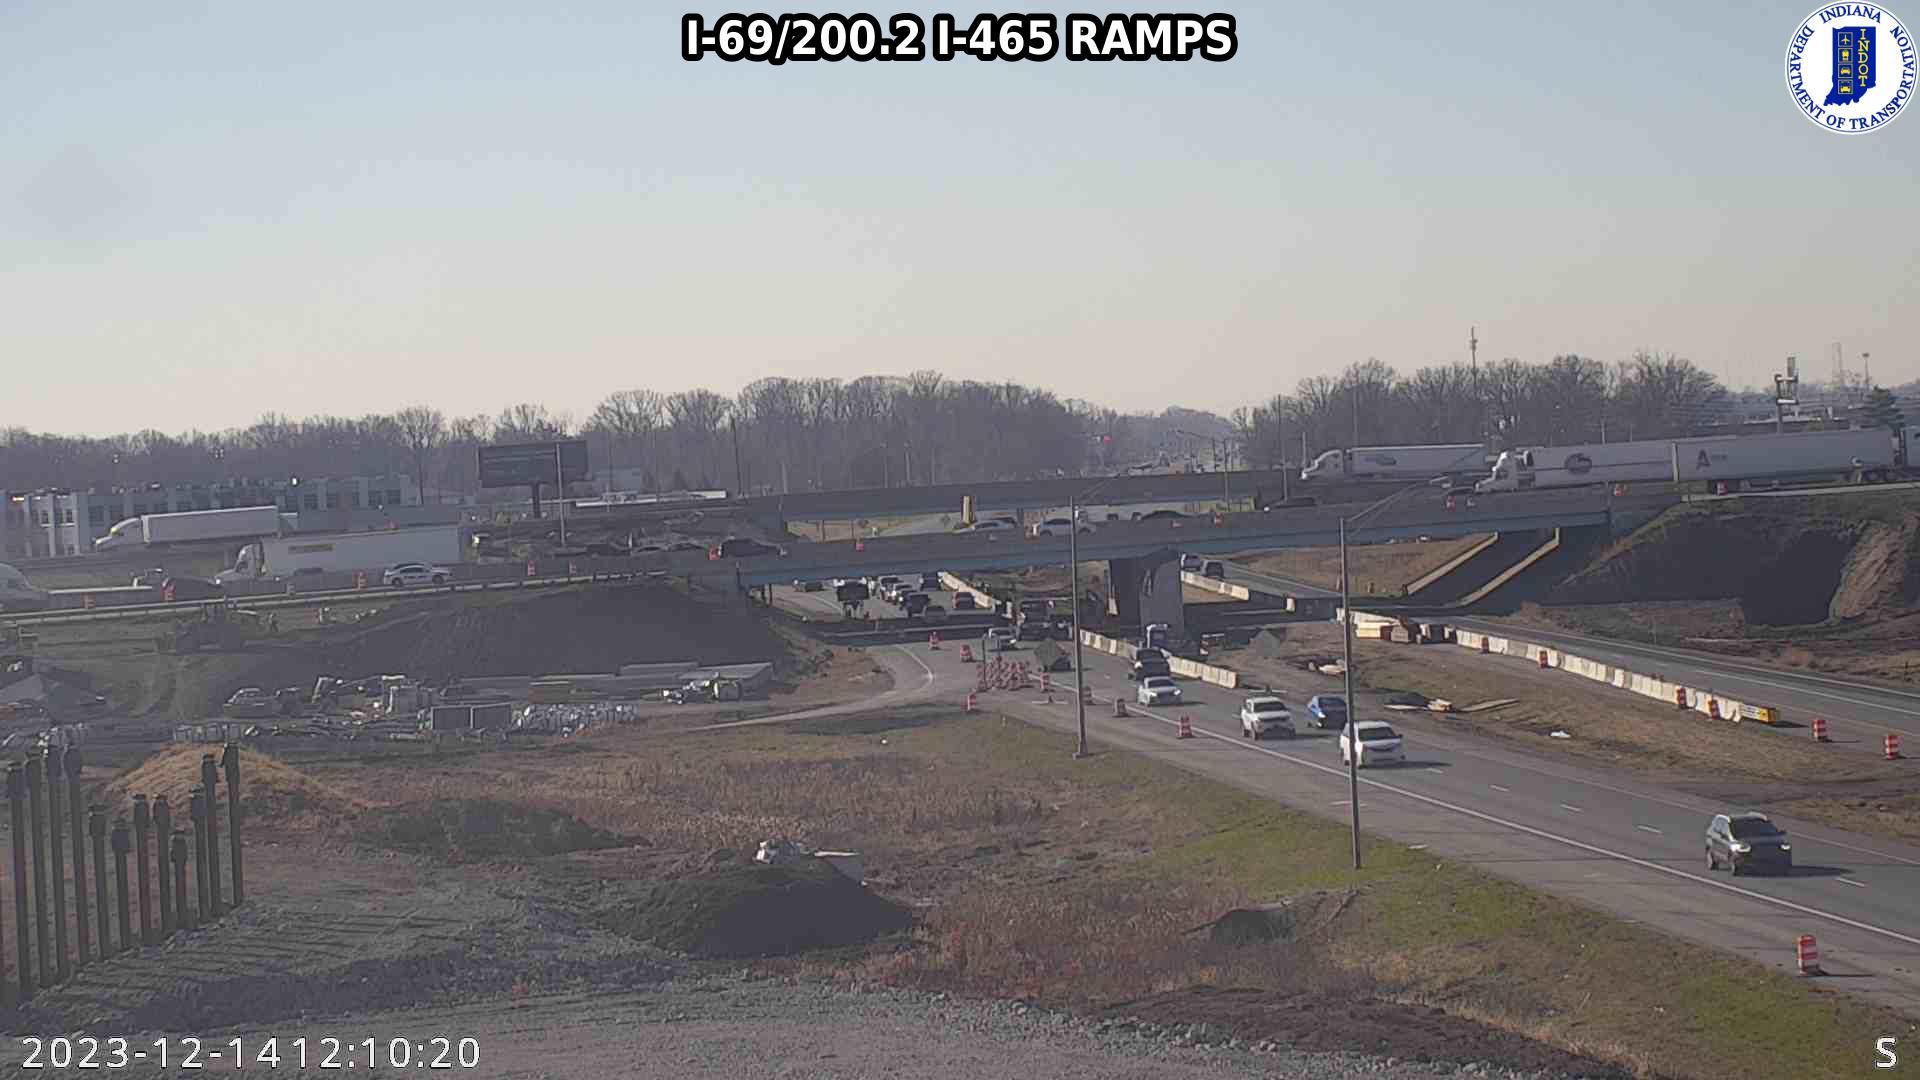 Traffic Cam Indianapolis: I-69: I-69/200.2 I-465 RAMPS